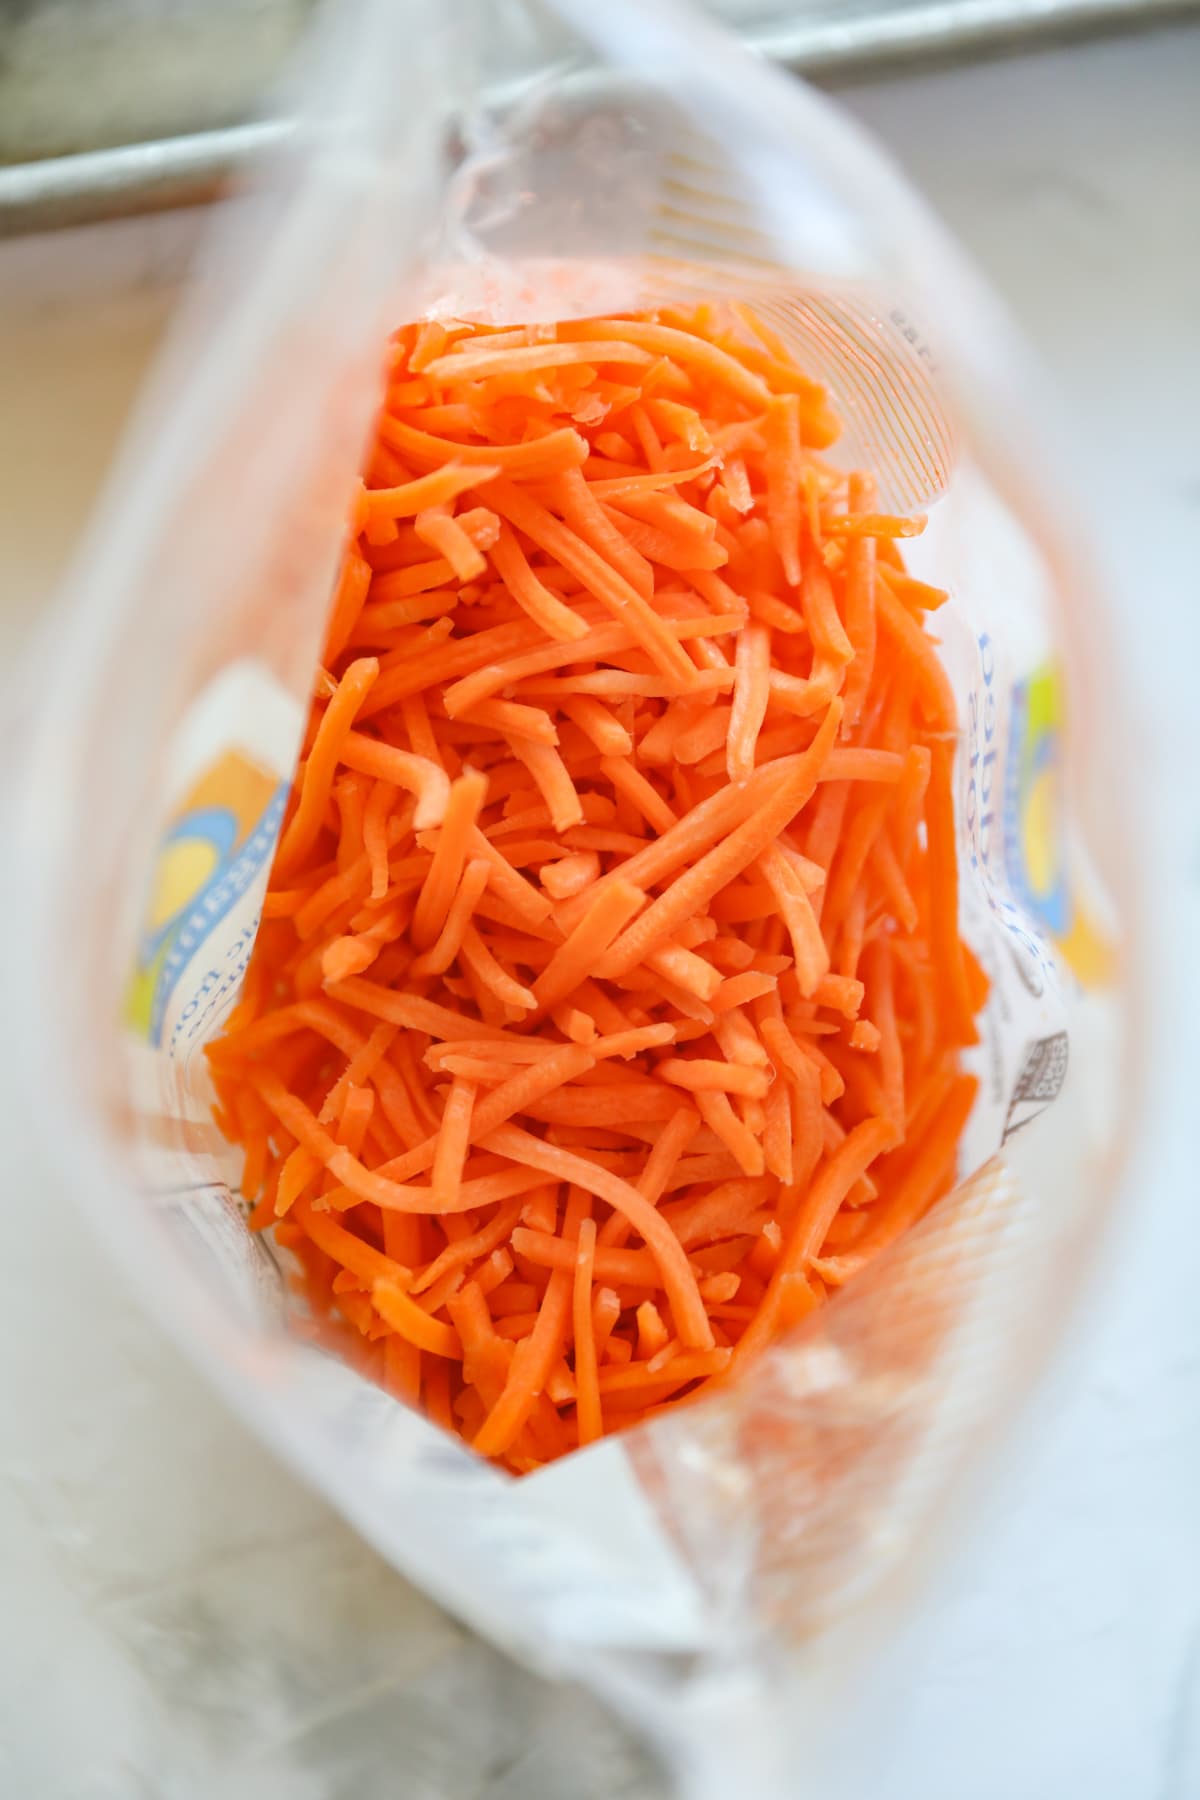 shredded carrots in a bag